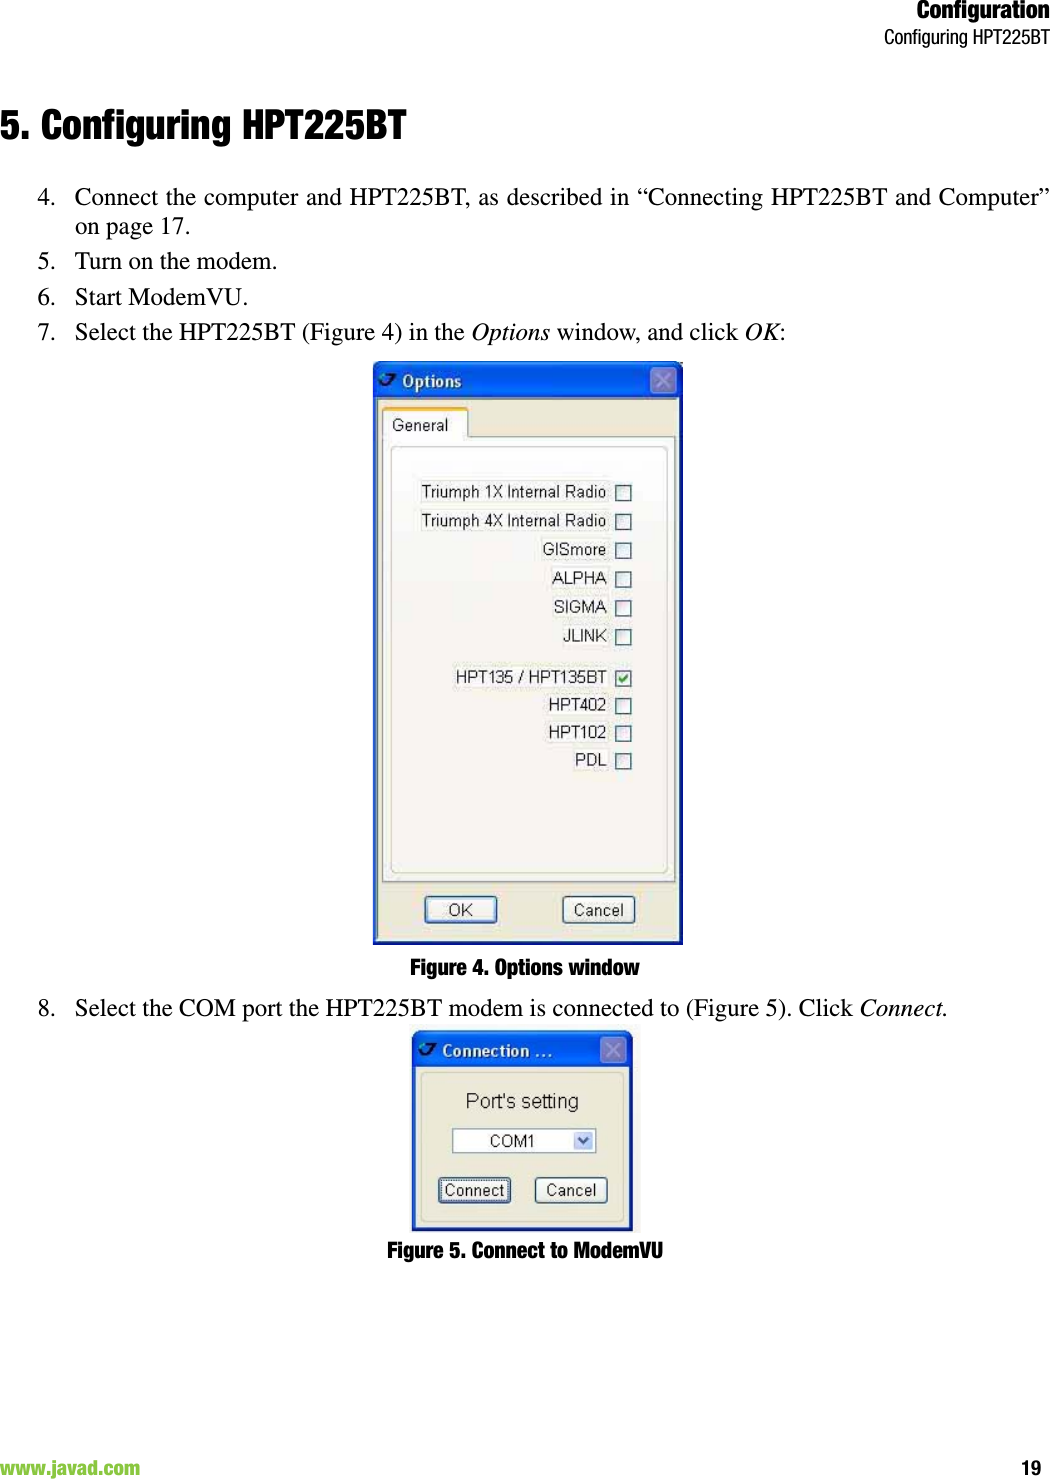 ConfigurationConfiguring HPT225BT19www.javad.com                                                                                                                                                        5. Configuring HPT225BT4. Connect the computer and HPT225BT, as described in “Connecting HPT225BT and Computer”on page 17. 5. Turn on the modem.6. Start ModemVU. 7. Select the HPT225BT (Figure 4) in the Options window, and click OK:Figure 4. Options window8. Select the COM port the HPT225BT modem is connected to (Figure 5). Click Connect.Figure 5. Connect to ModemVU